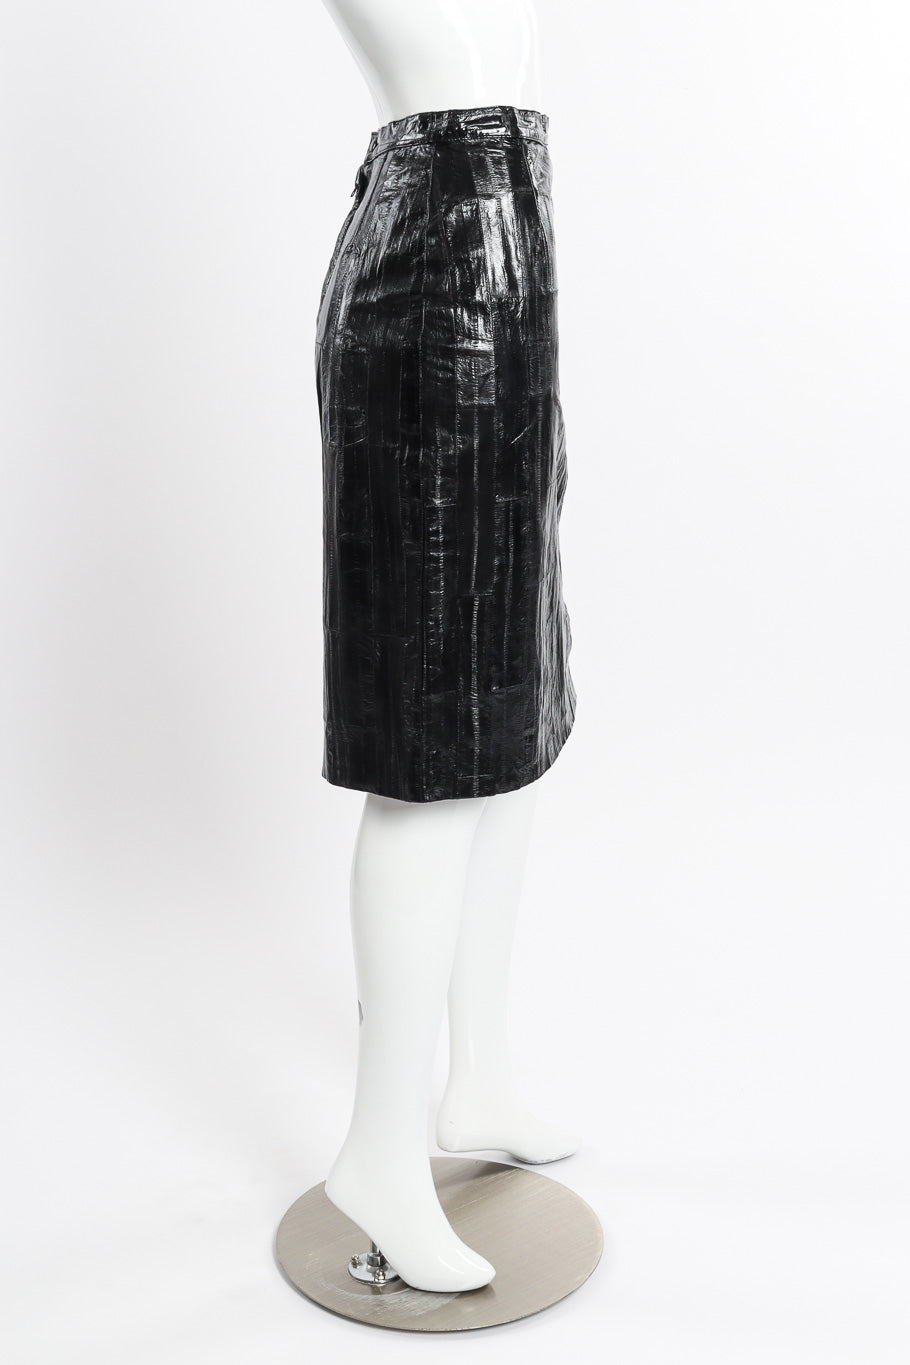 Vintage Krizia Eel Patent Leather Skirt side view on mannequin @recessla